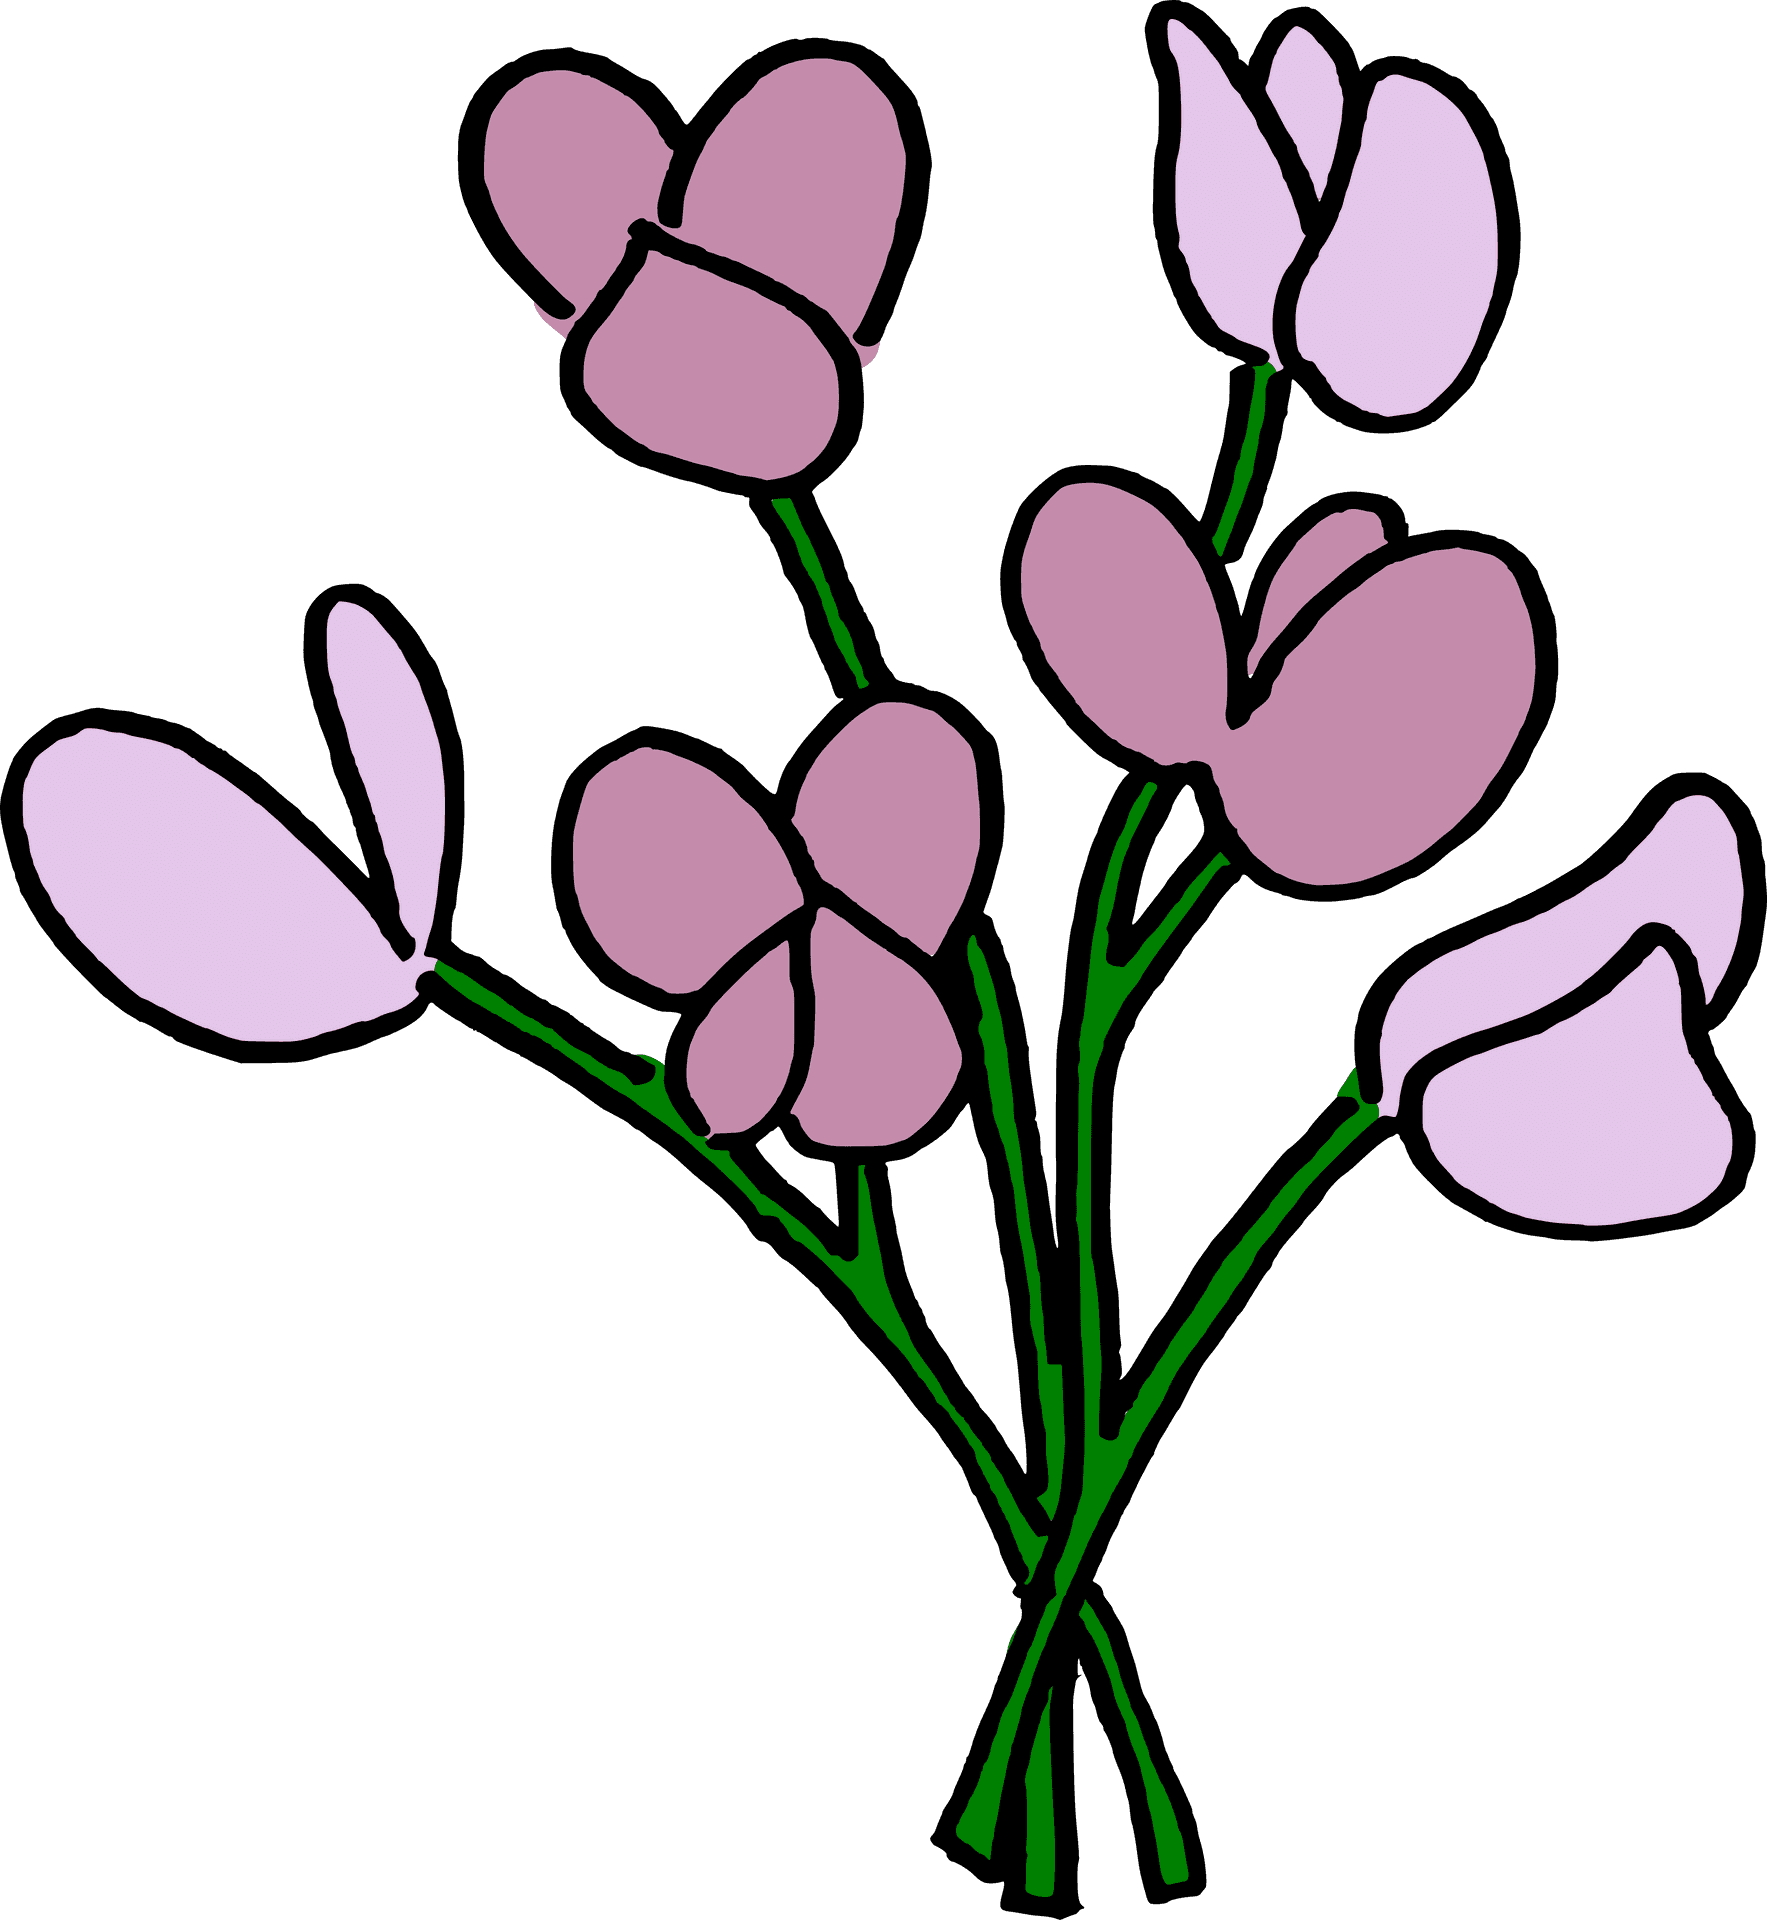 Stylized Purple Flowers Illustration PNG